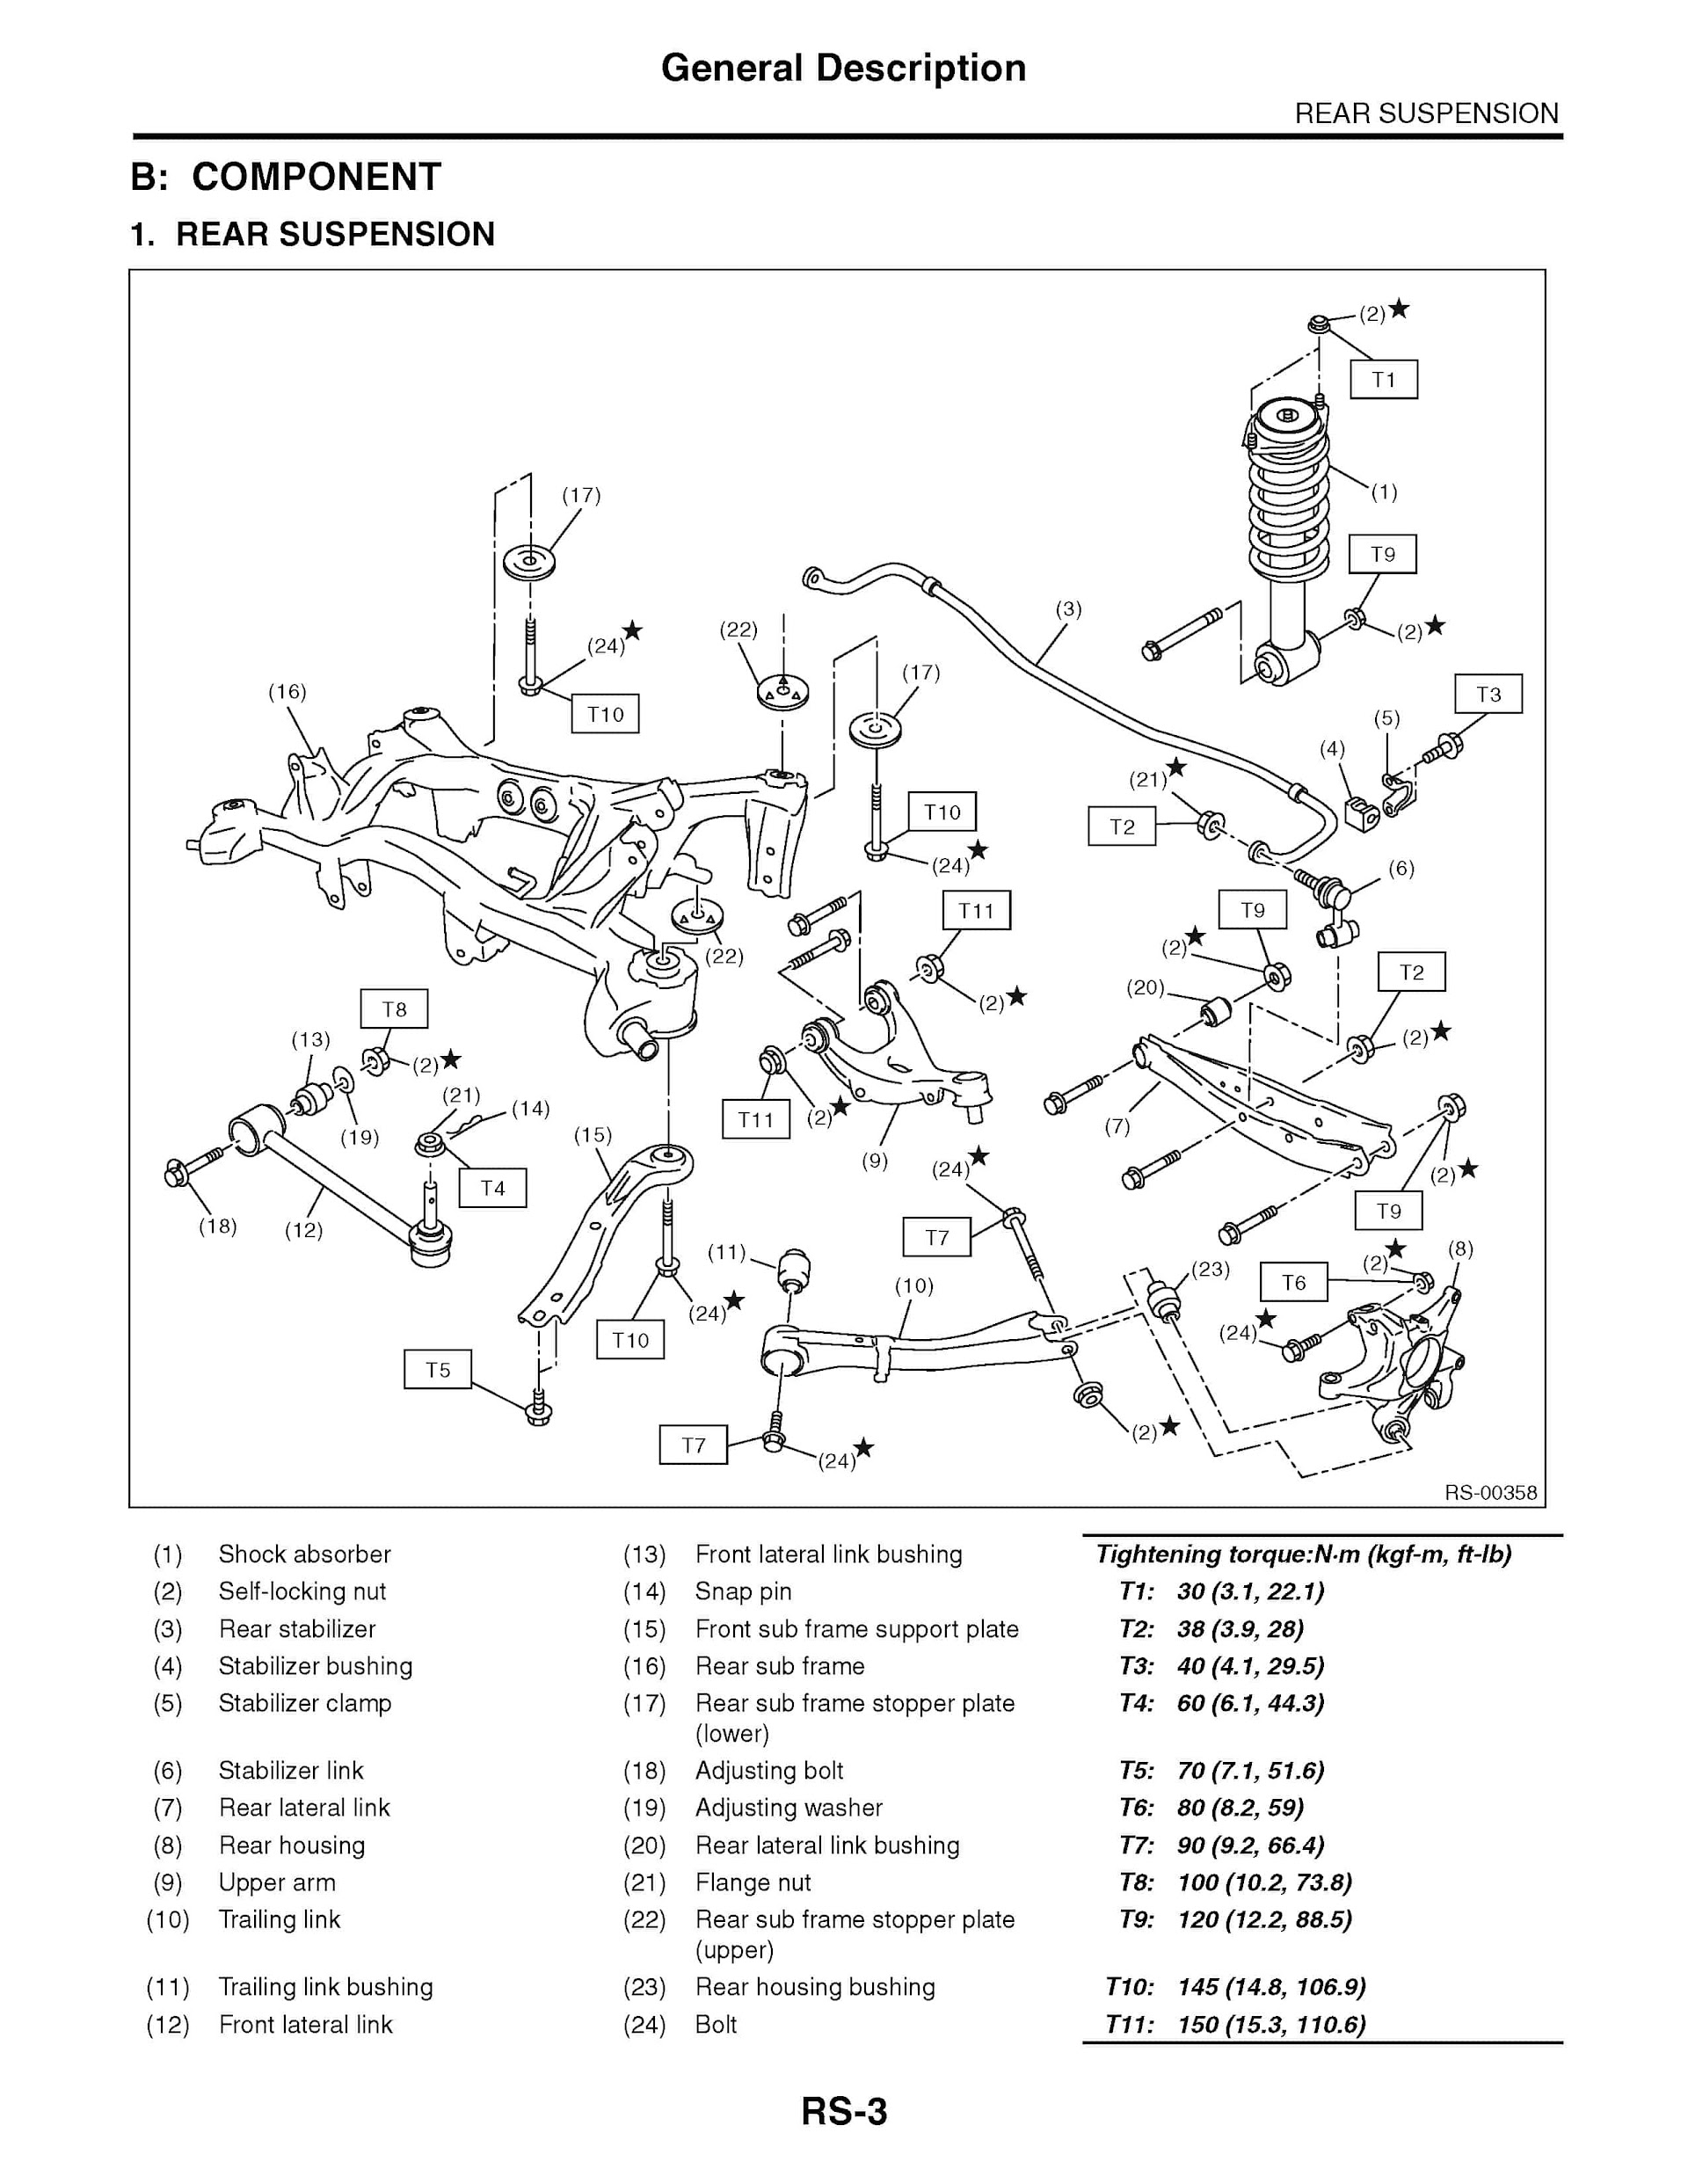 2011 Subaru Impreza Repair Manual (WRX and WRX STI), Rear Suspension